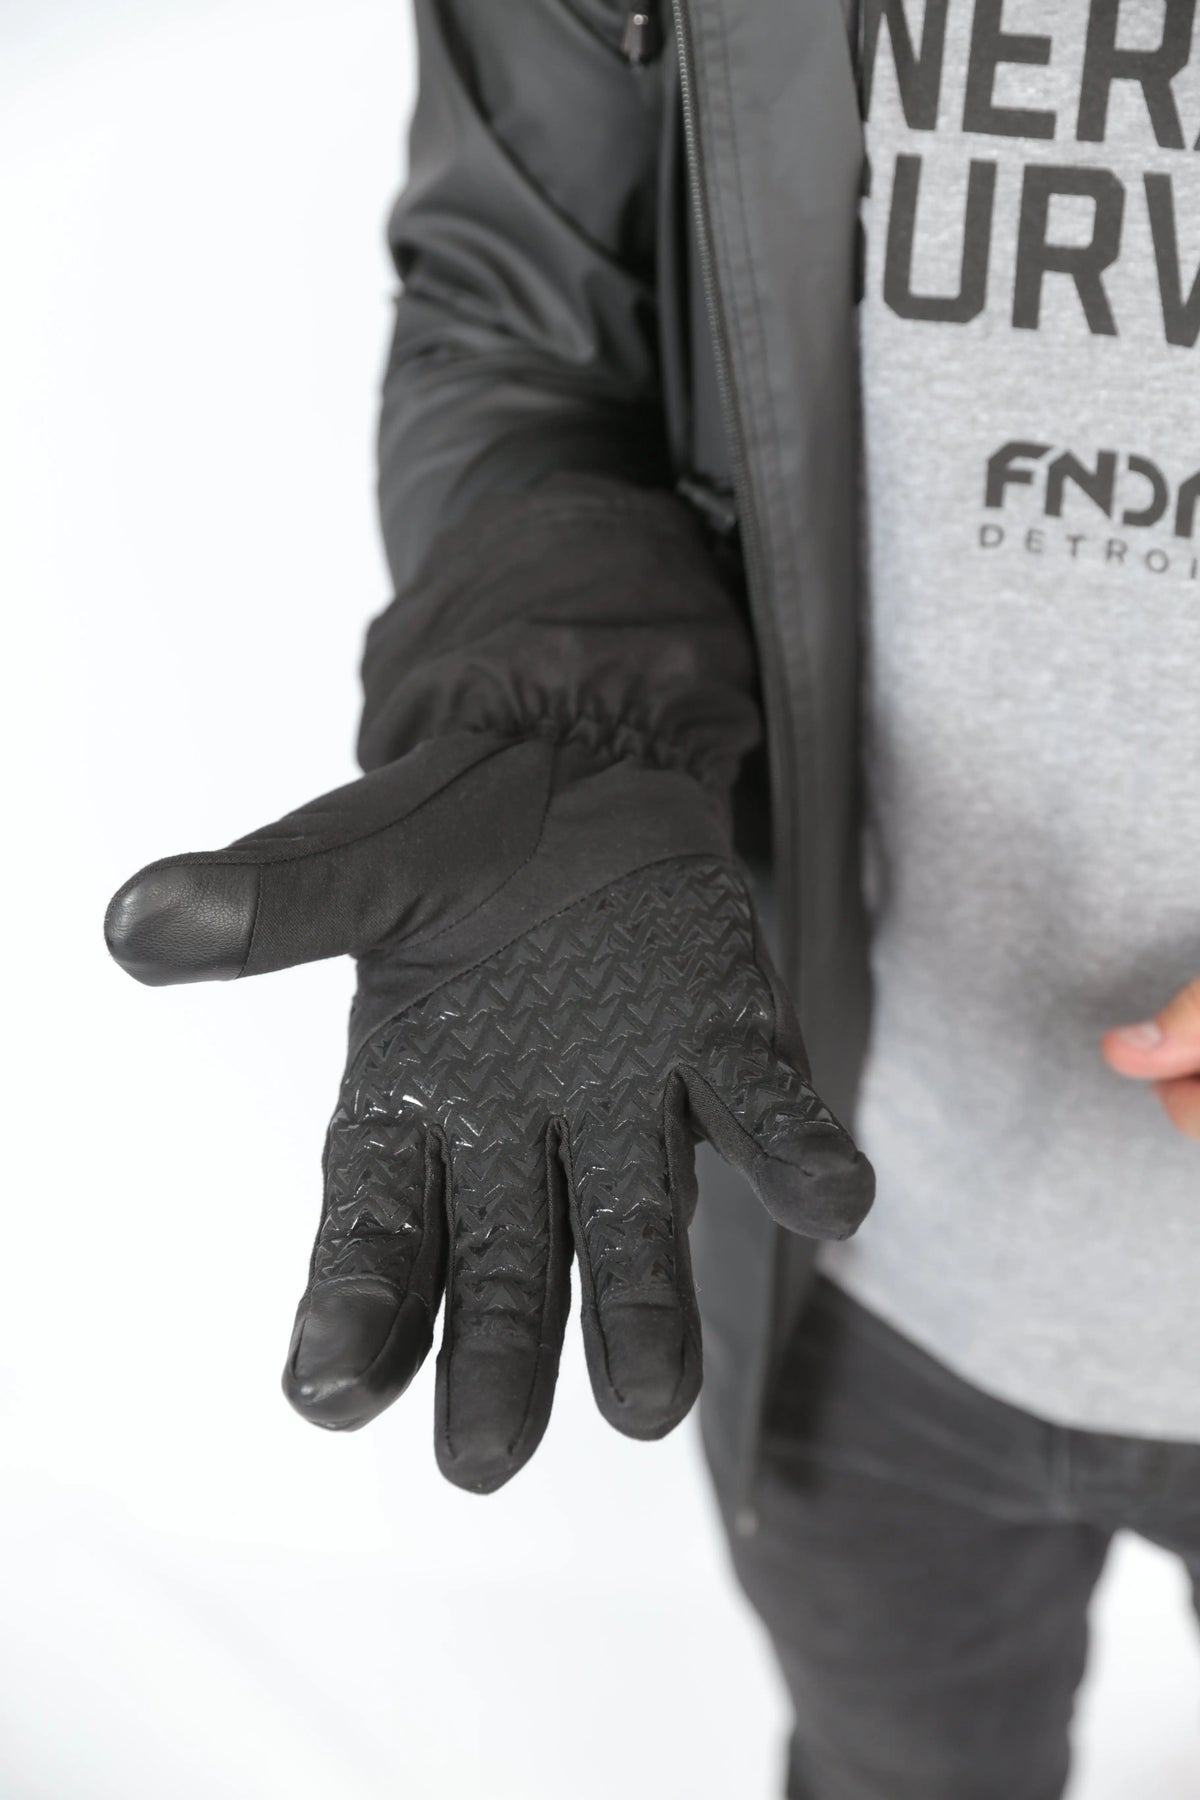 FNDN FLSK Glove - The FLASK GLOVE FNDN